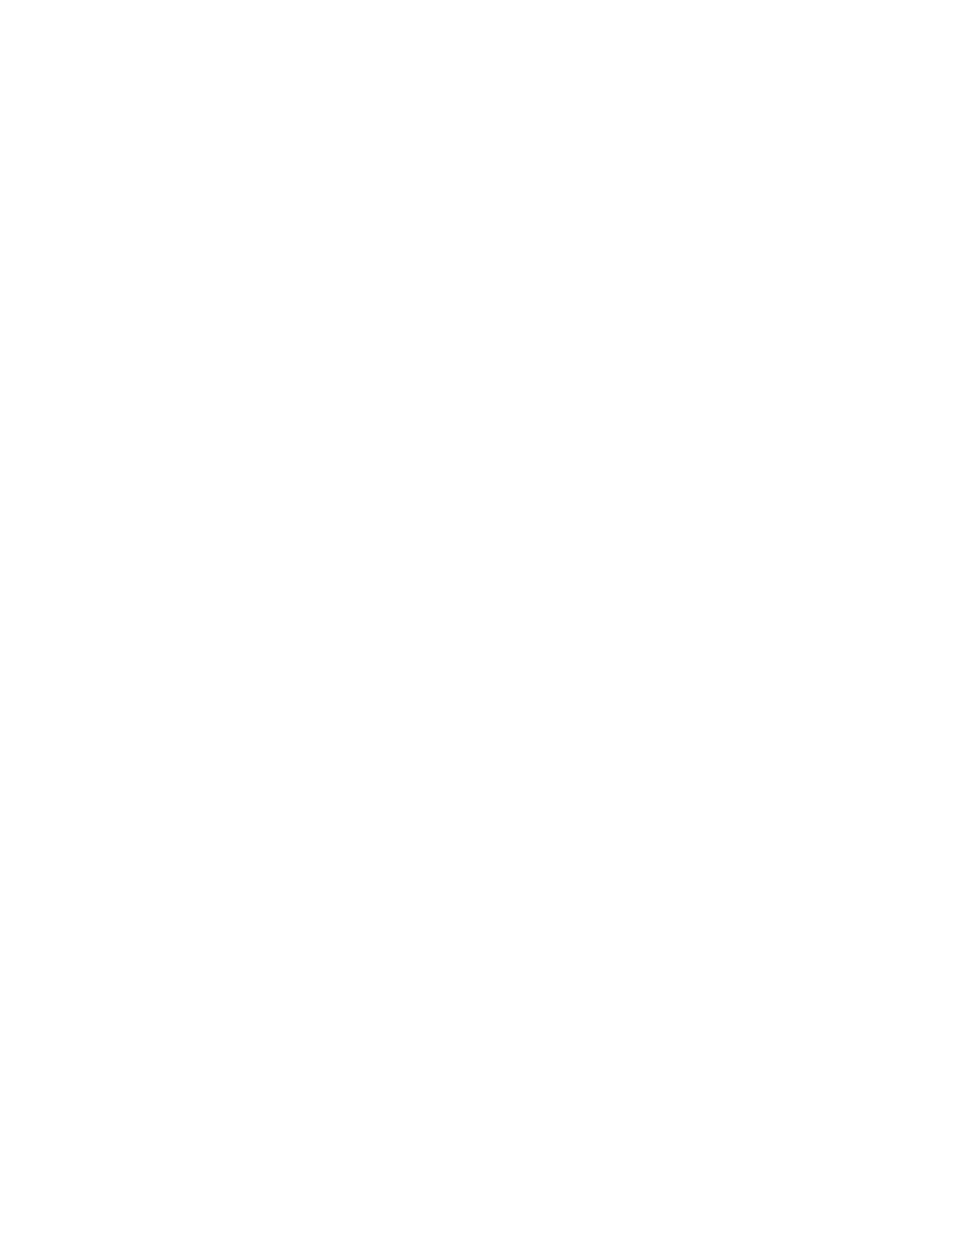 Rhynchotus rufescens perdigão S Nothura maculosa perdiz A,B,I,Q,S PODICIPEDIDAE Podilymbus podiceps mergulhão B,I,M,S,U Podiceps major mergulhão-grande B,I,M,S,U PHALACROCORACIDAE Phalacrocorax